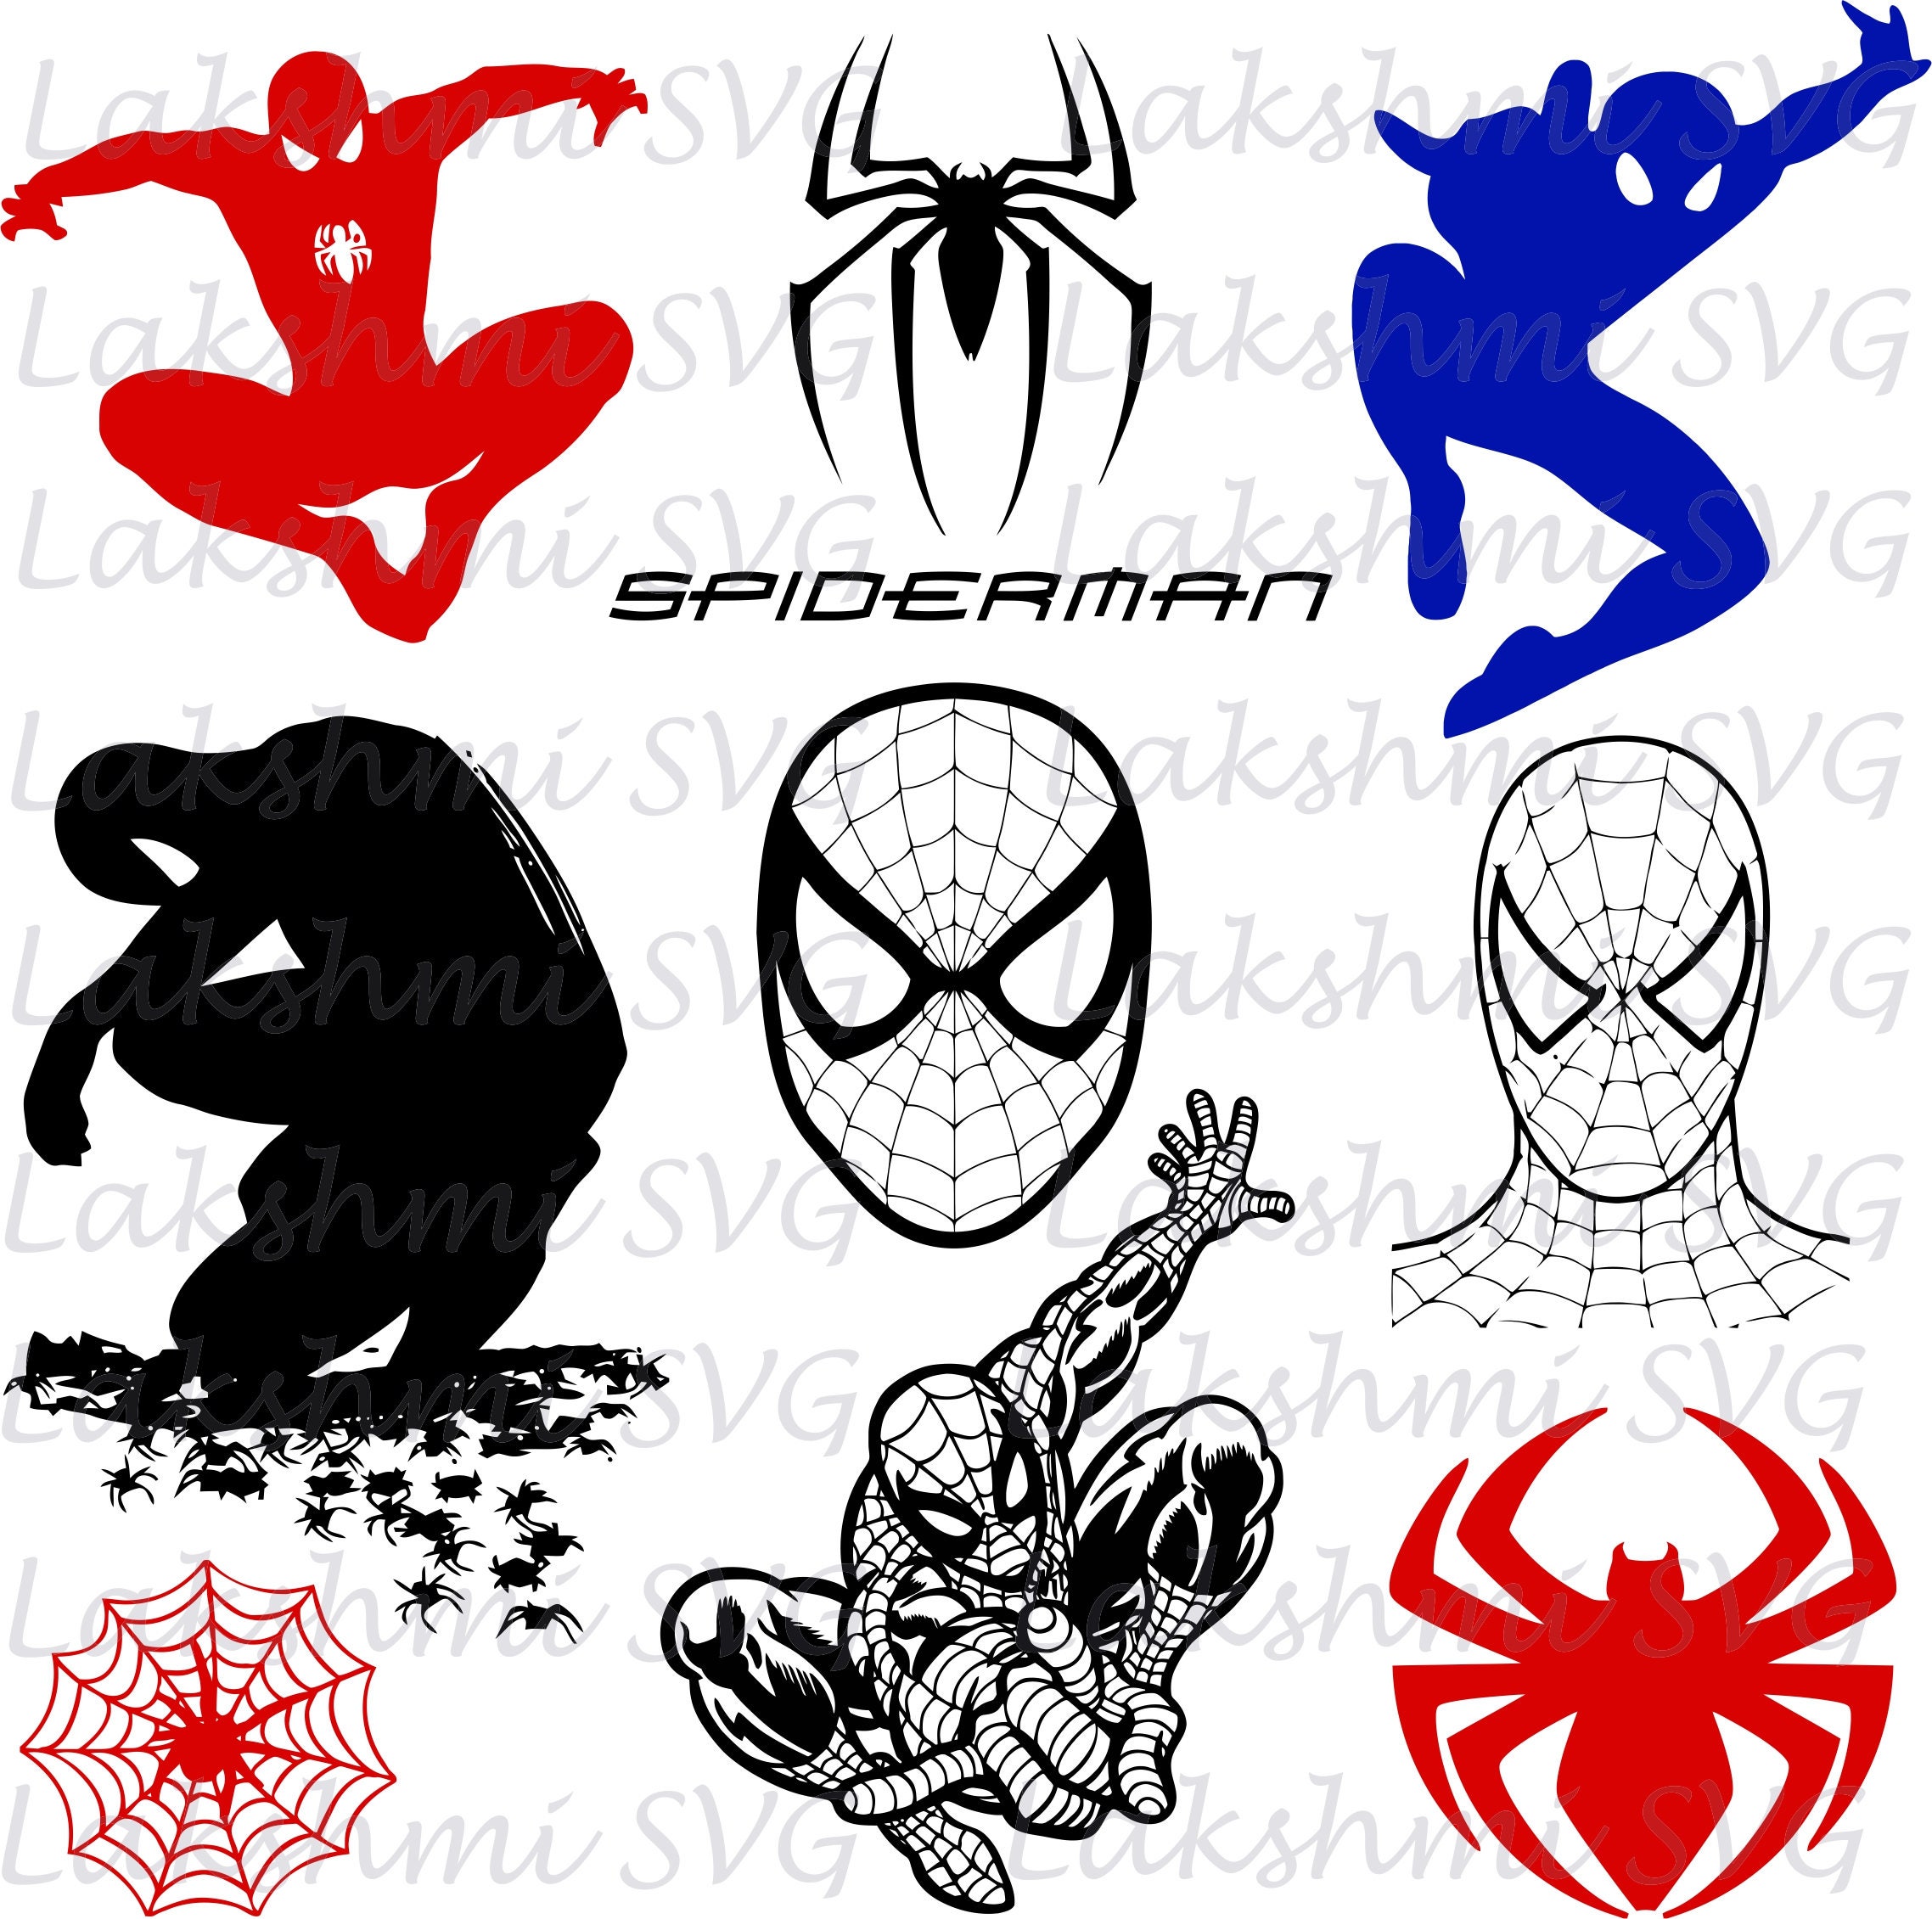 Spiderman svgSuper Hero SVGspiderman silhouette Logos and